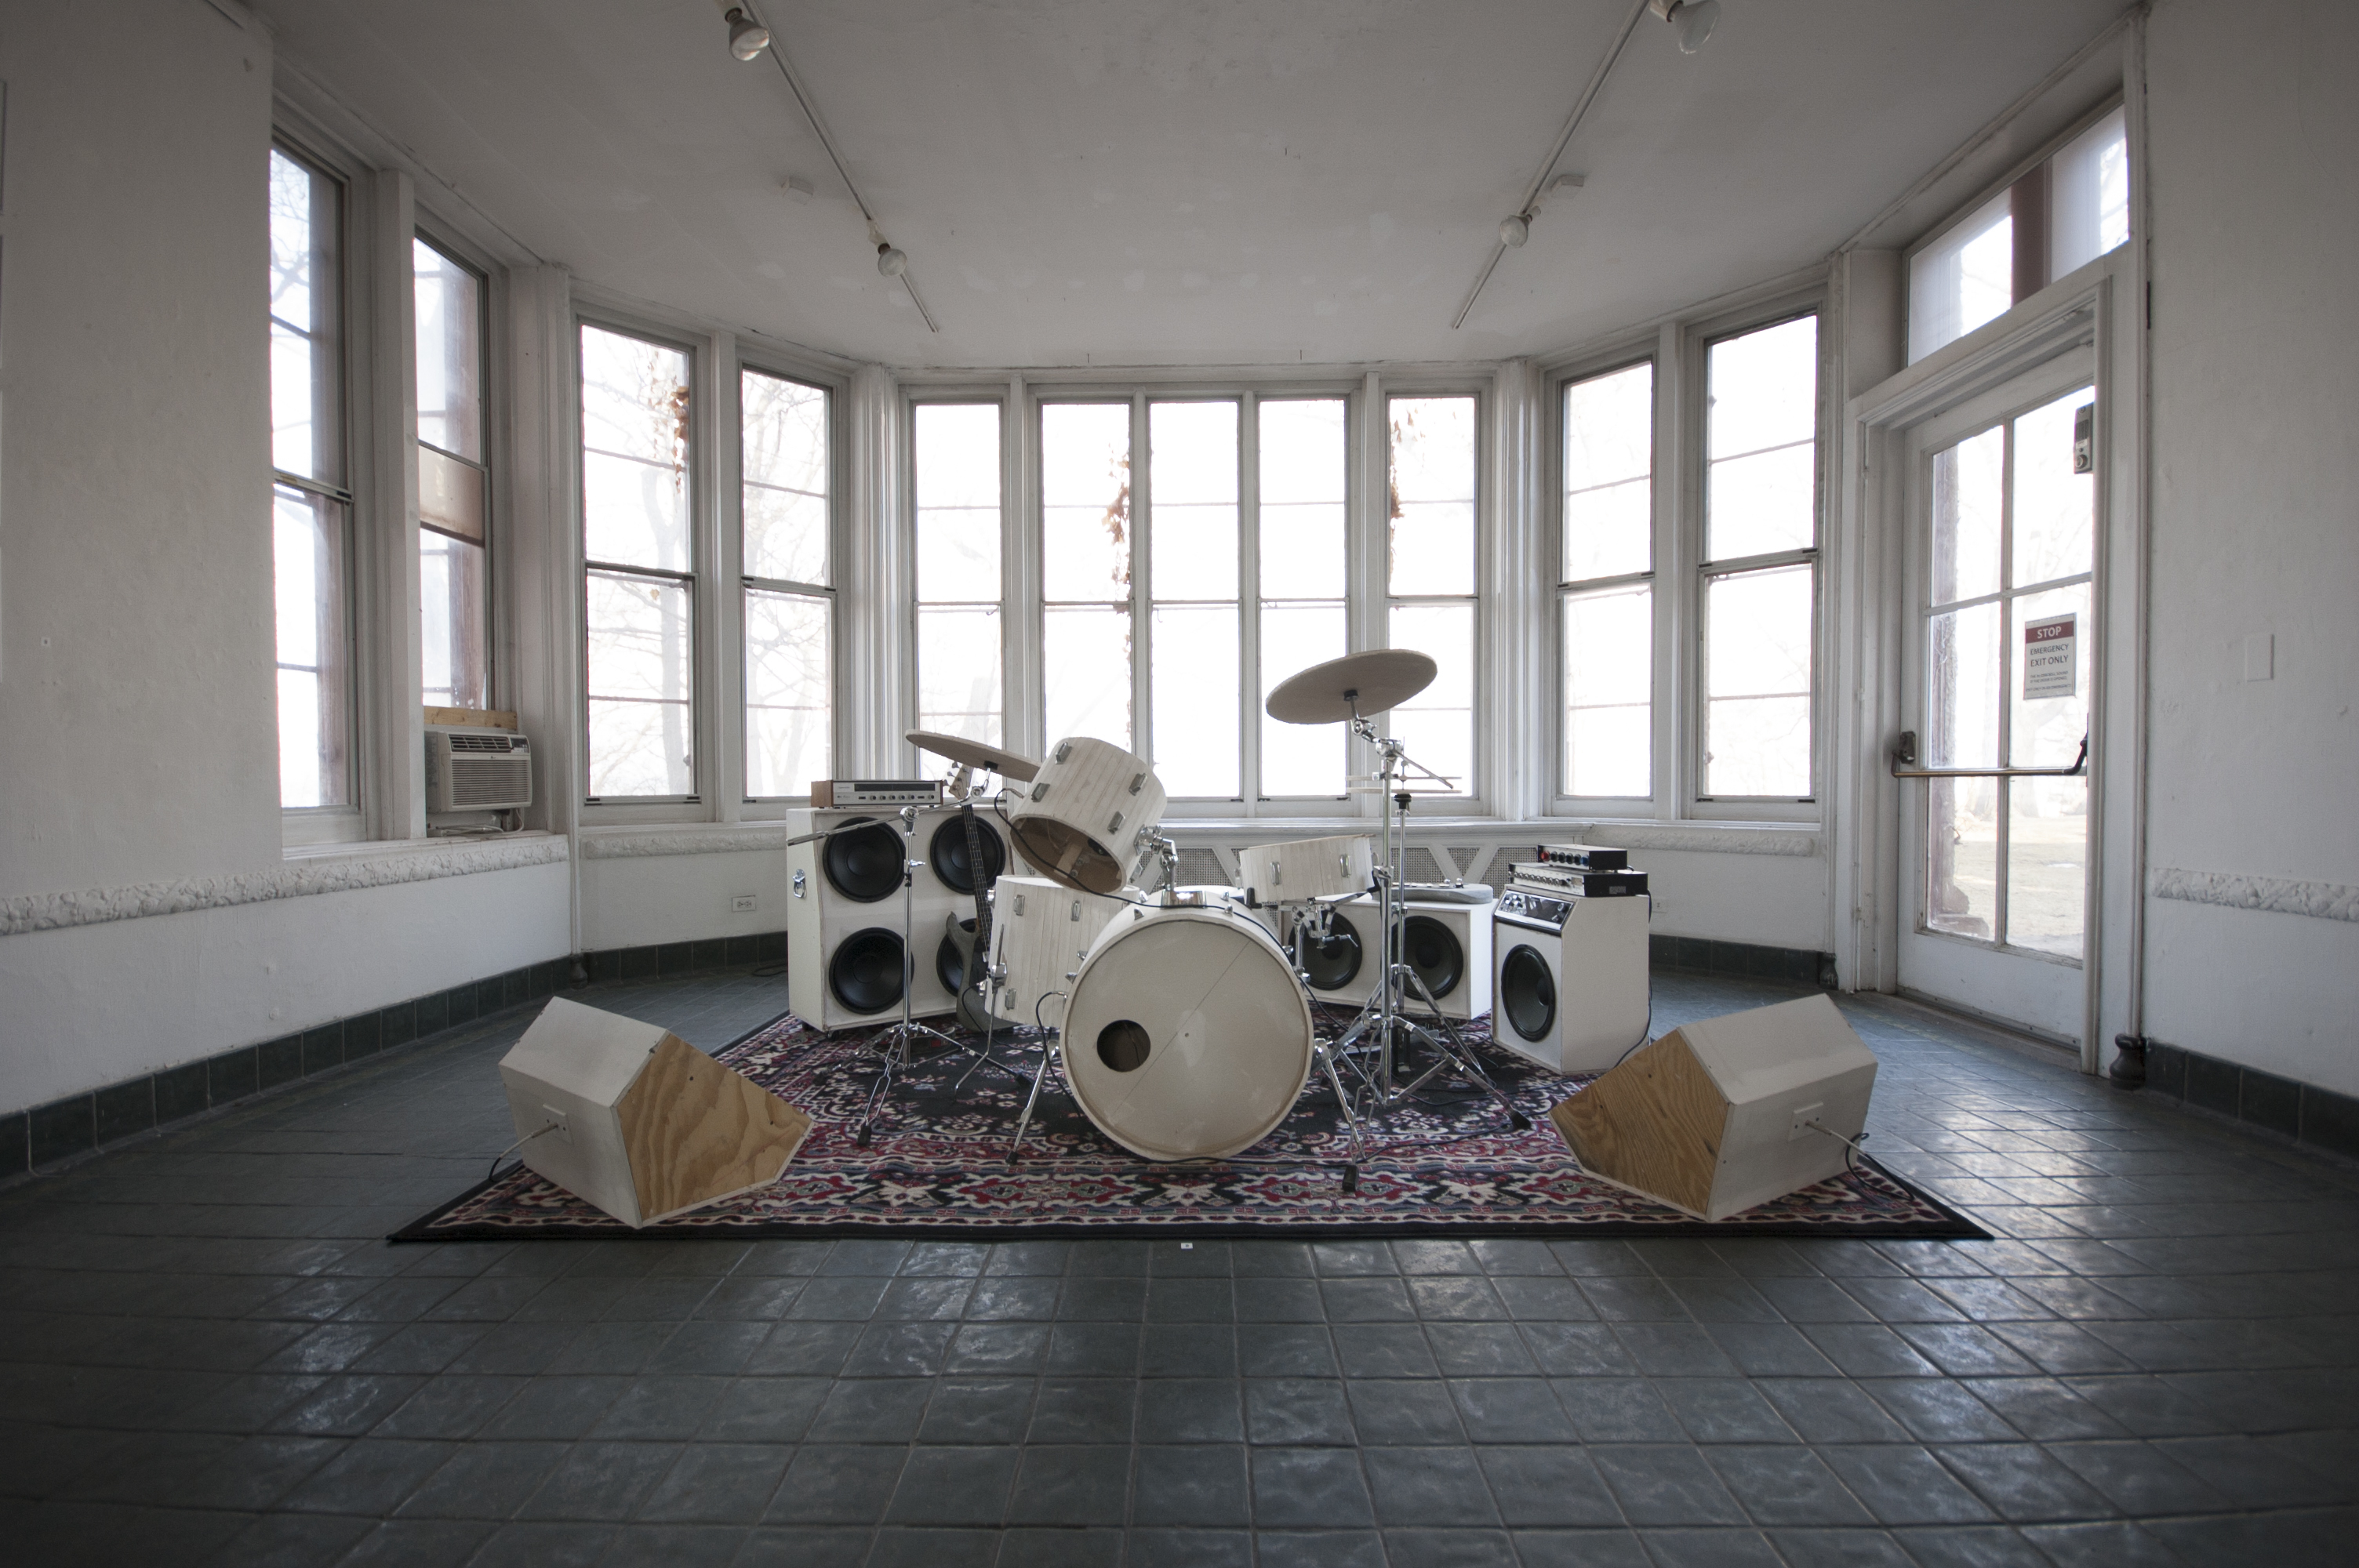 Scott Carter, Disonar, drywall, concrete, drum set hardware, contact mics, amplifiers, speakers, effects pedals (2013)